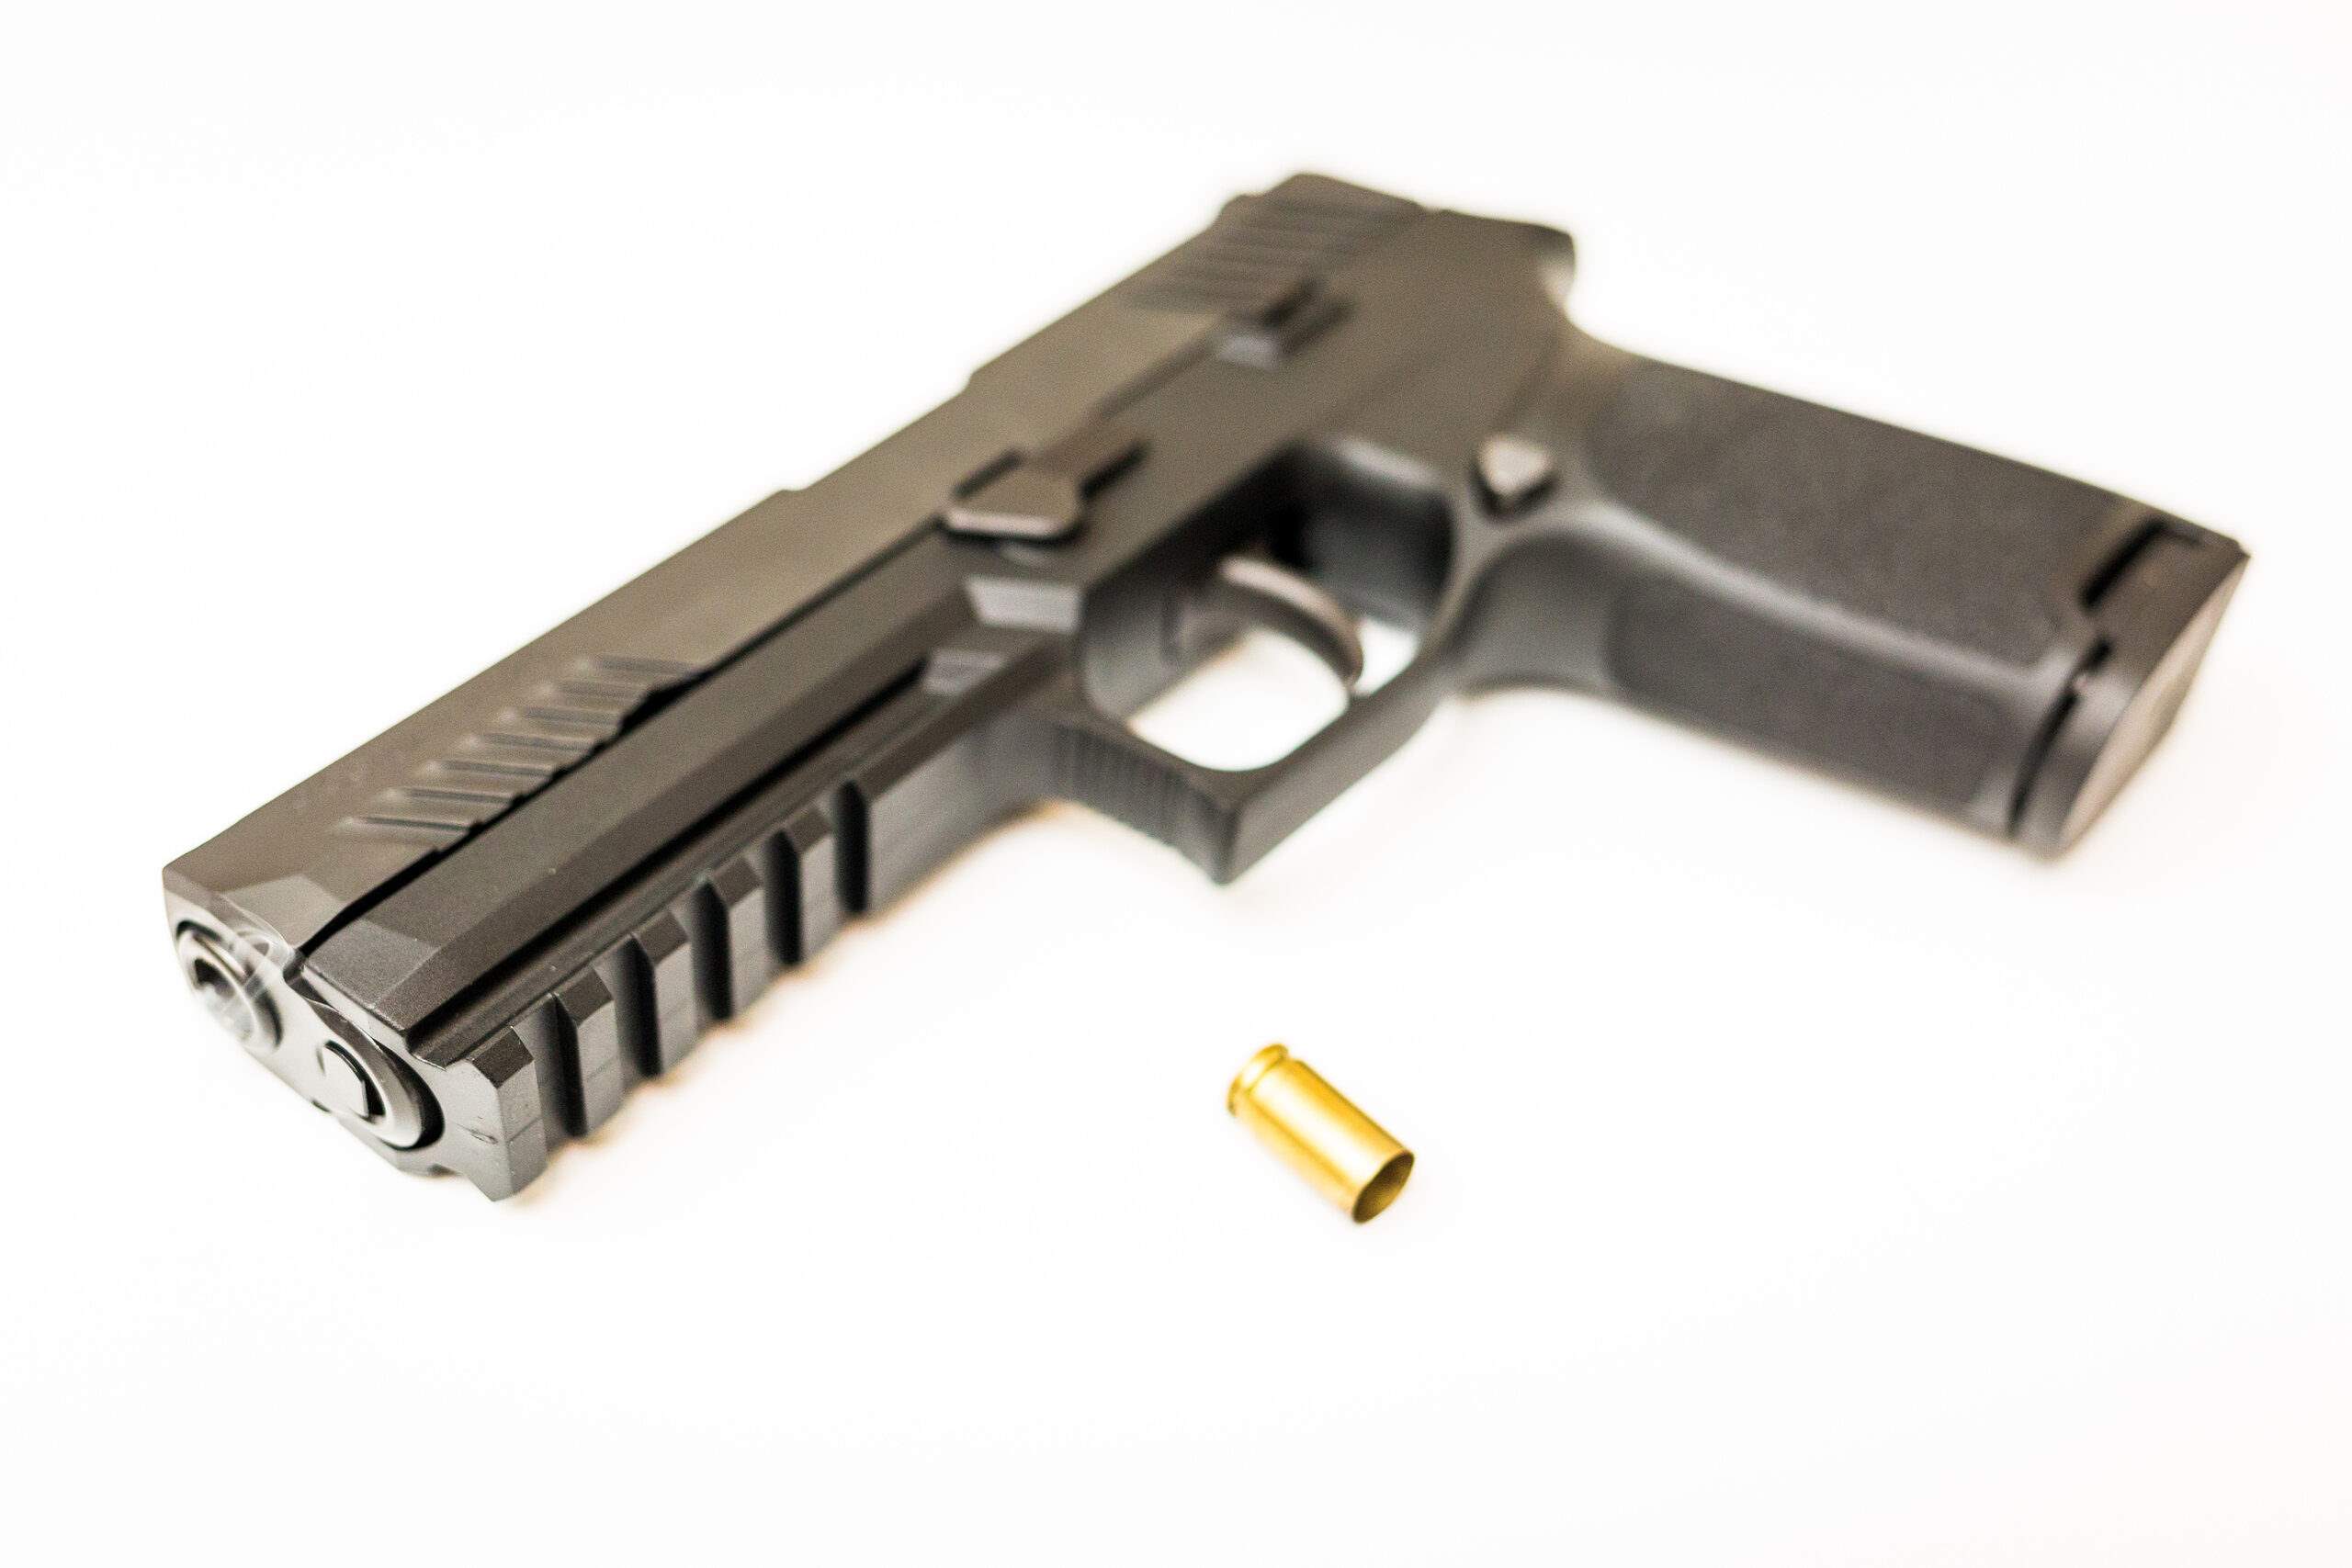 Sig Sauer P320 Handgun Misfire Lawsuits Filing a Handgun Lawsuit